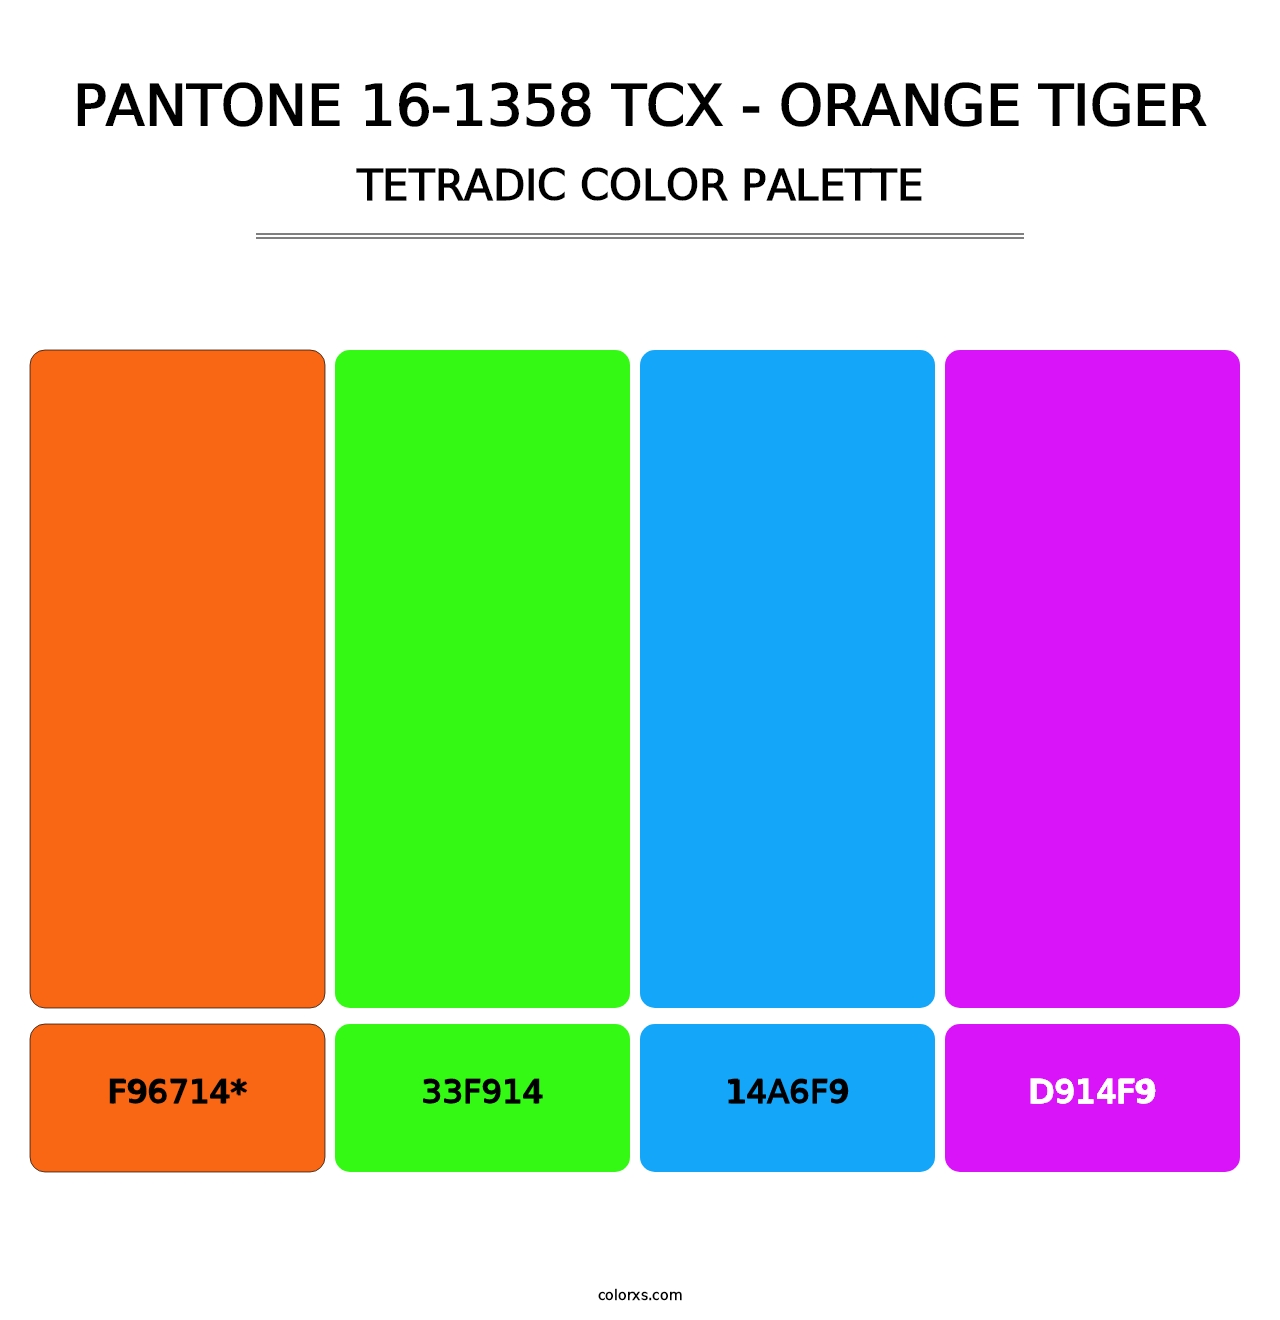 PANTONE 16-1358 TCX - Orange Tiger - Tetradic Color Palette